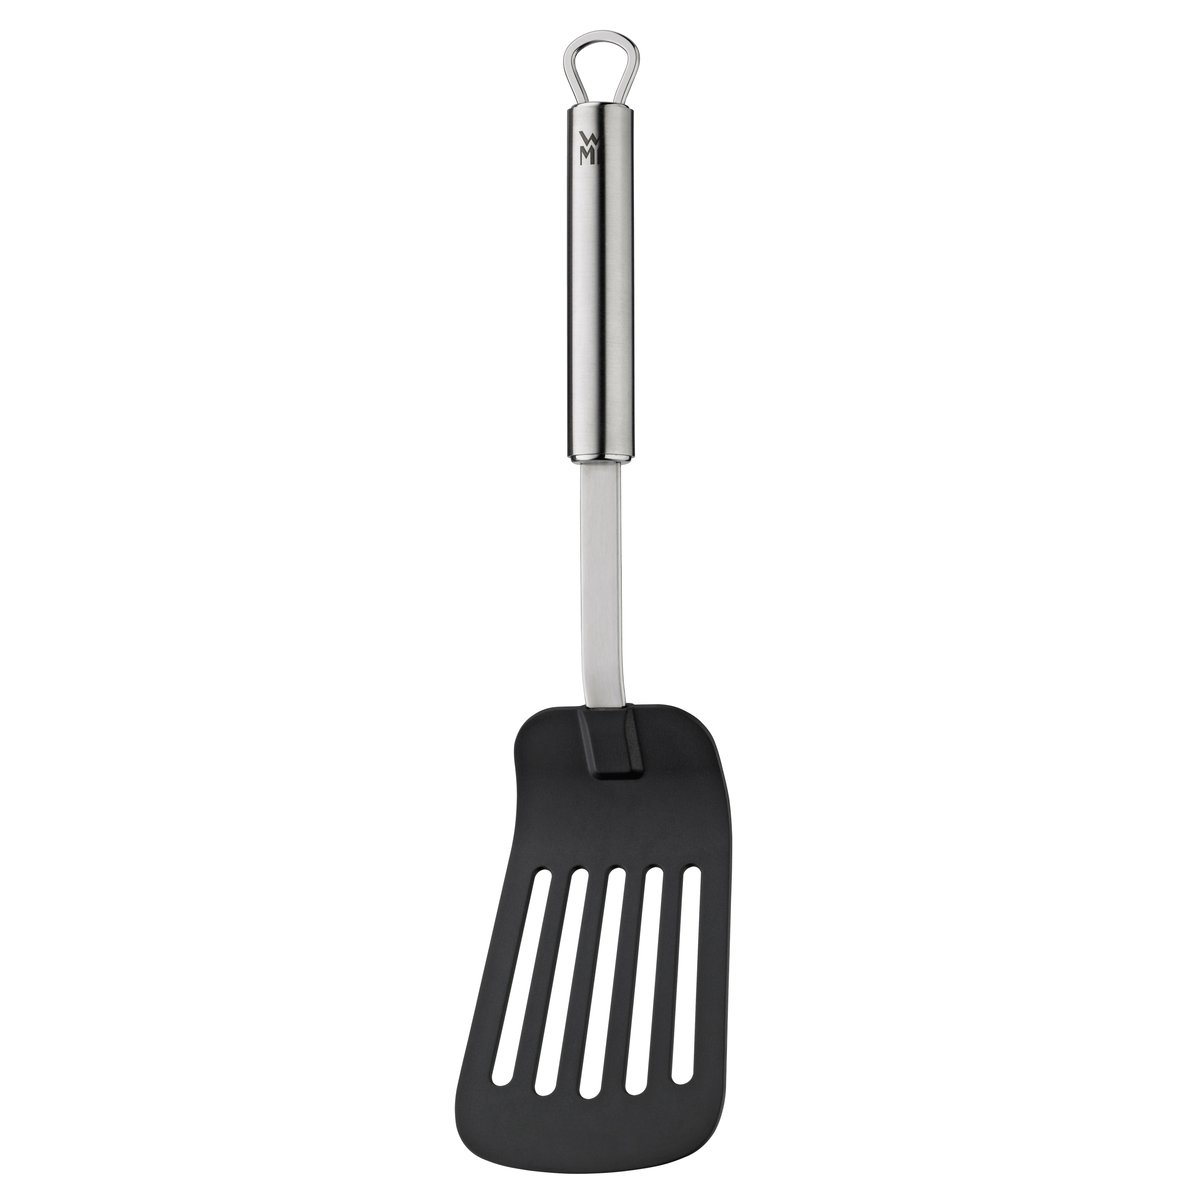 wmf spatule profi plus 32cm noir